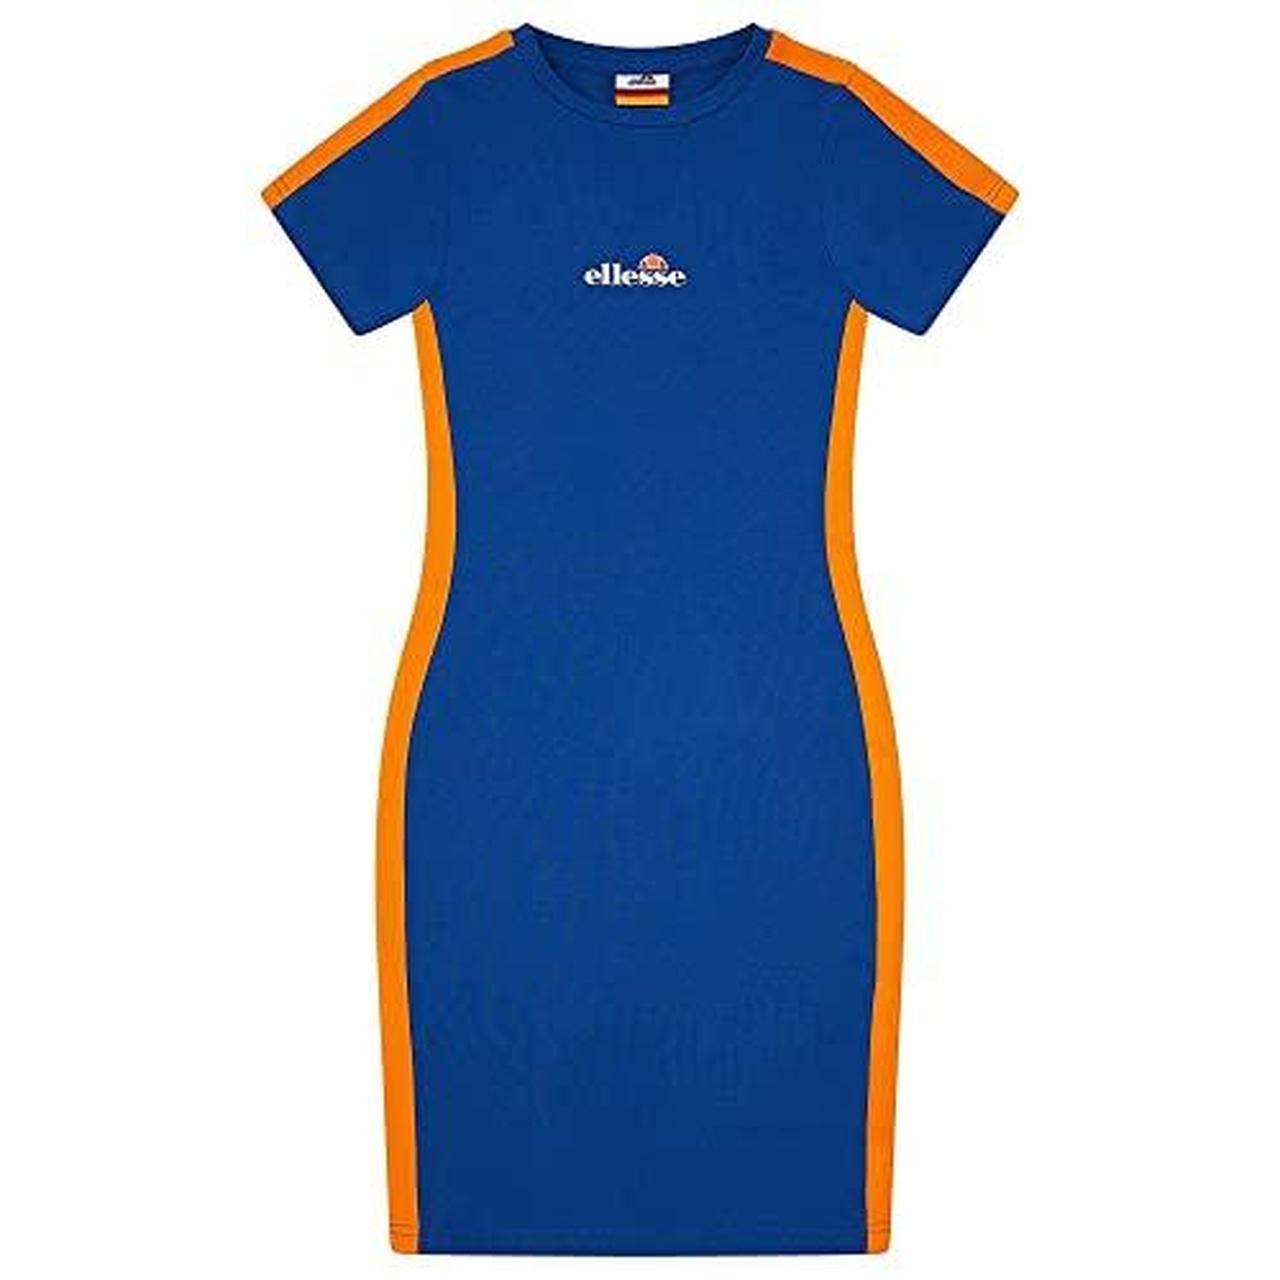 Ellesse Women's Blue and Orange Dress